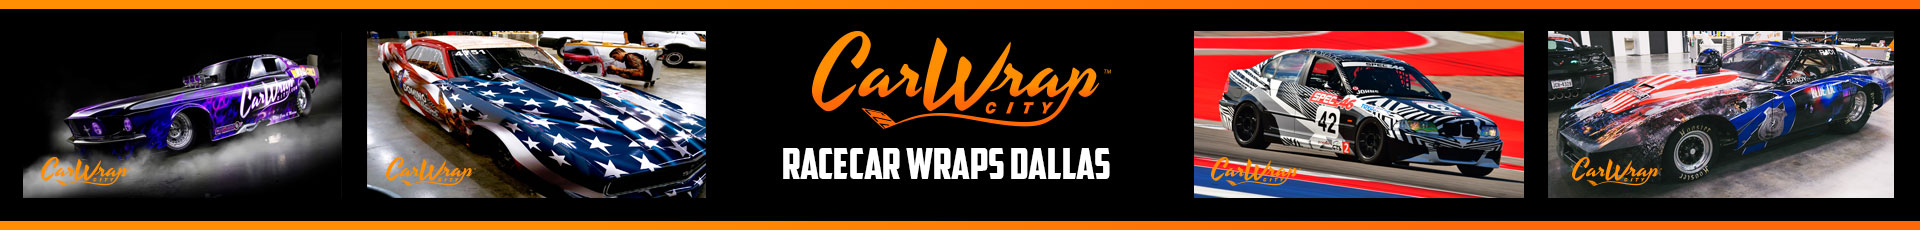 Racecar Wraps Dallas